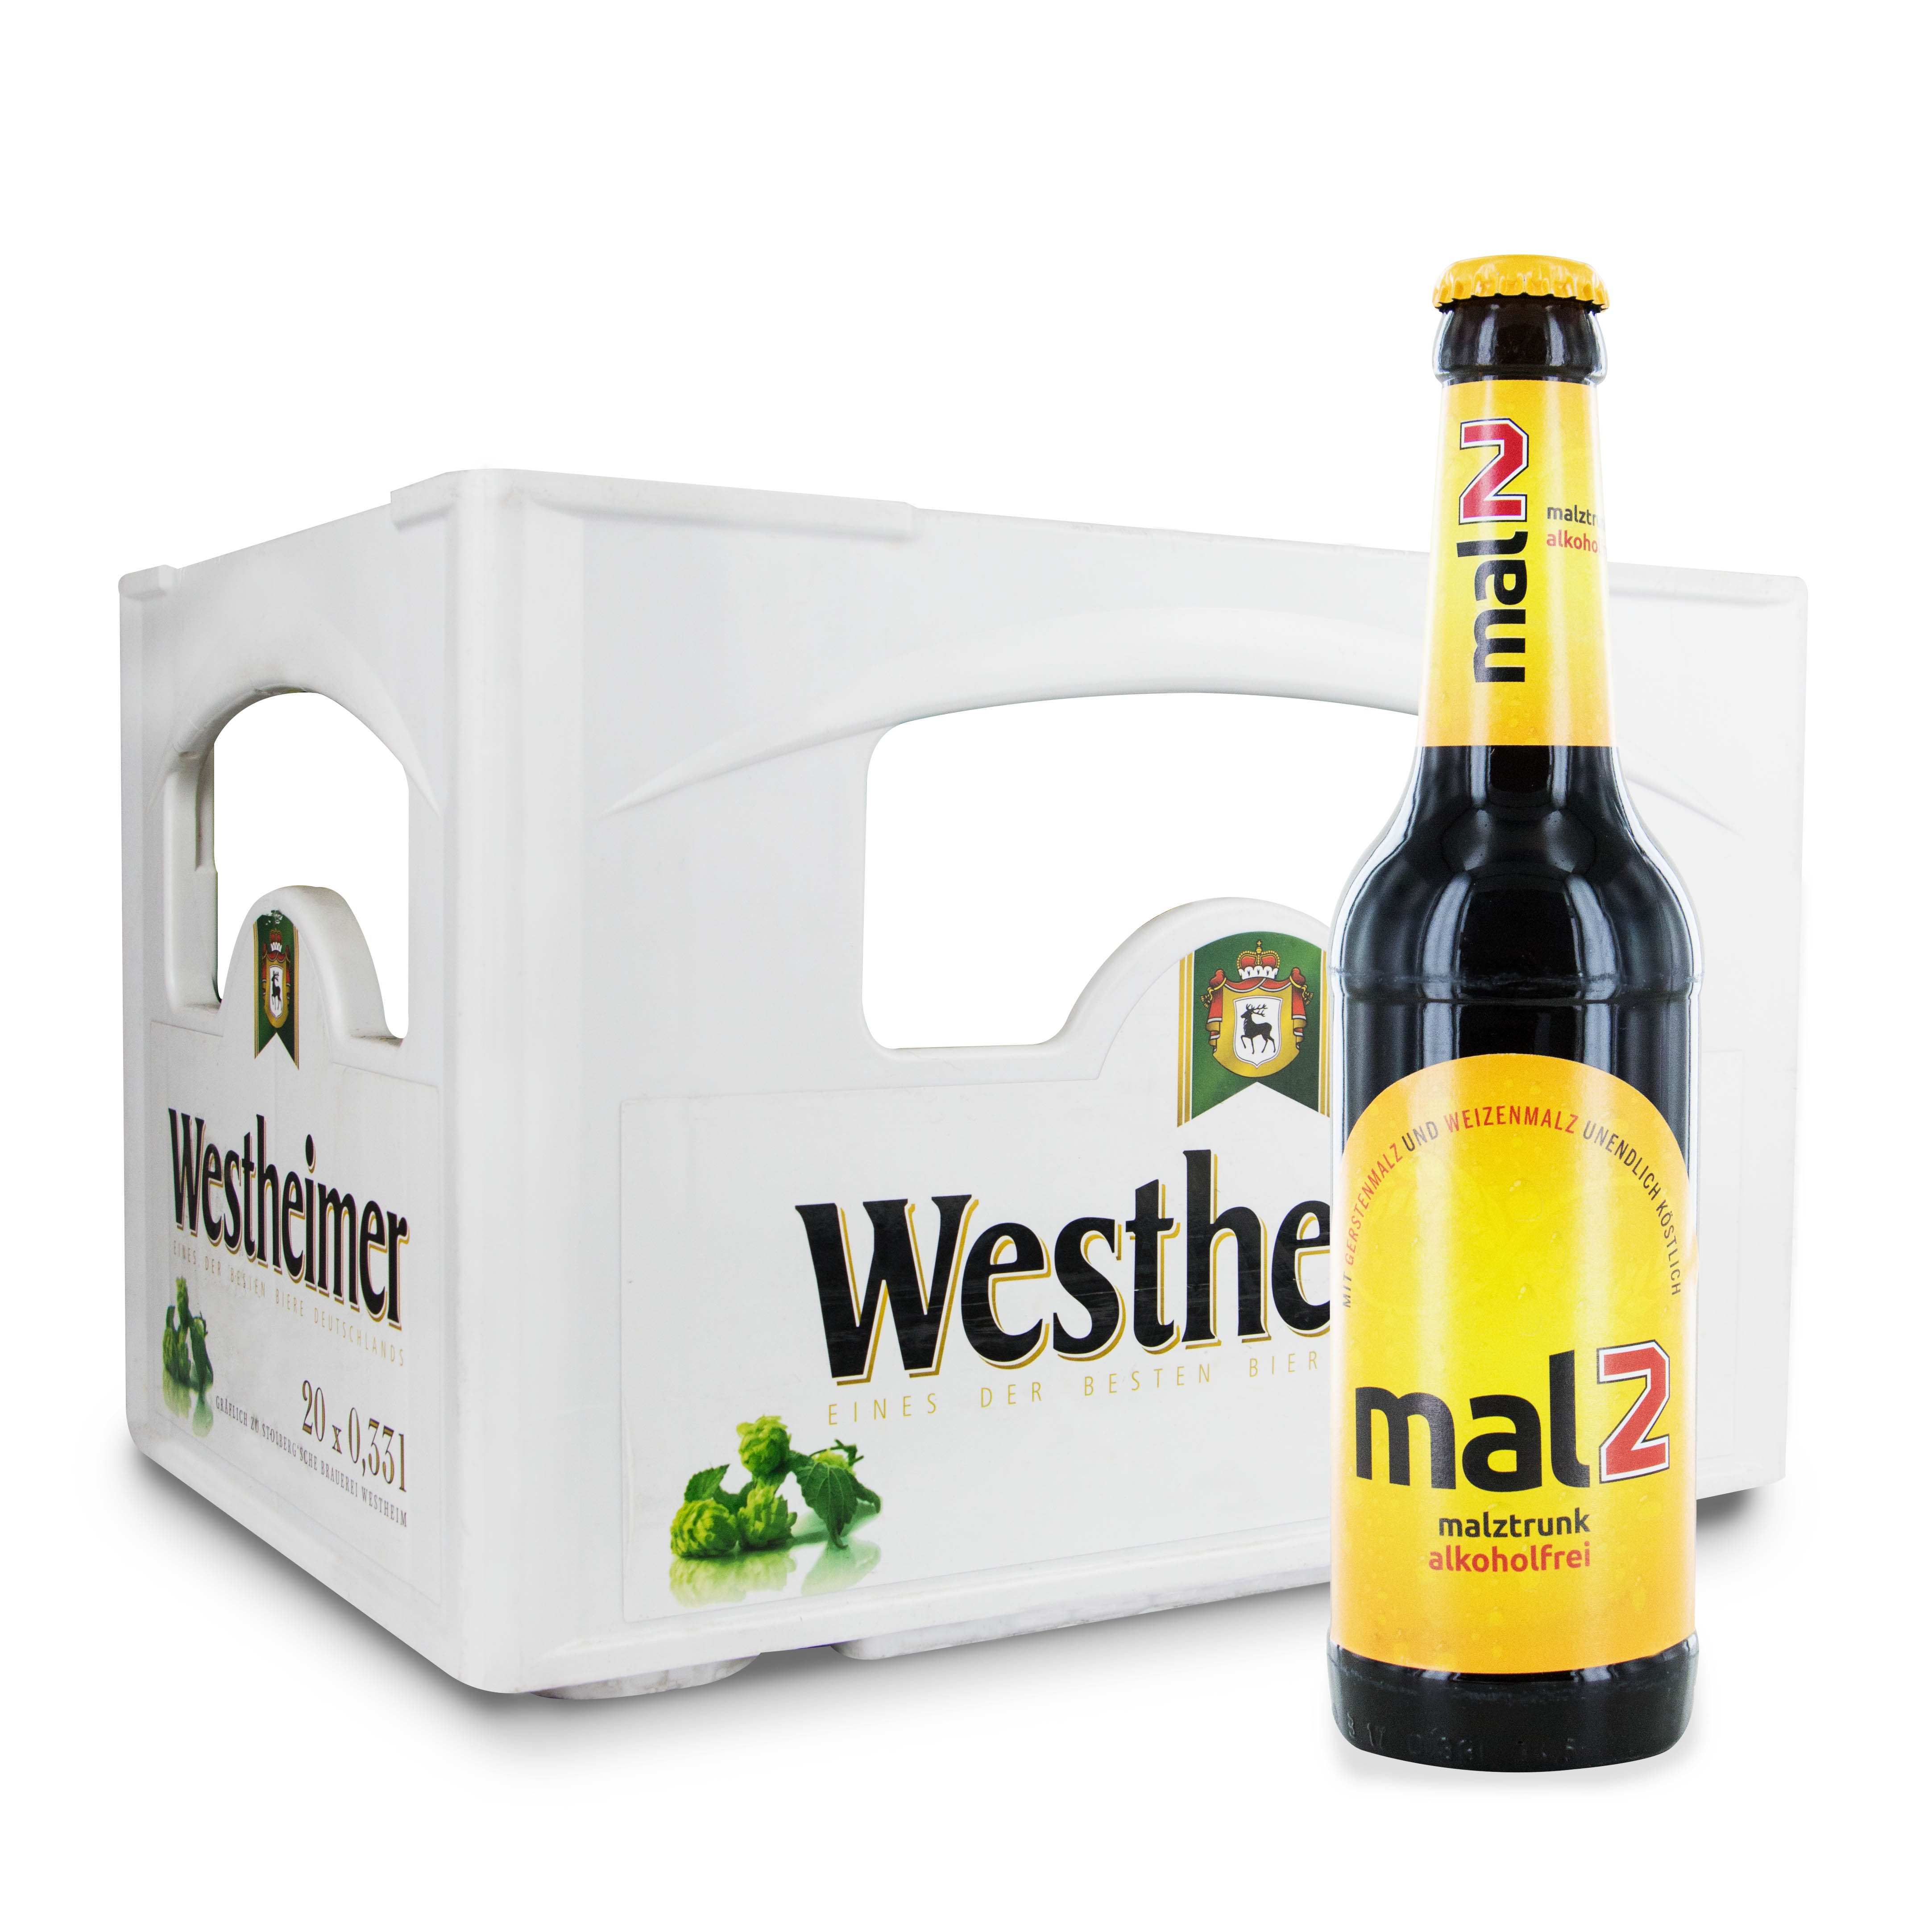 Westheimer alkoholfreies MalZ Malztrunk in der Kiste-zoom